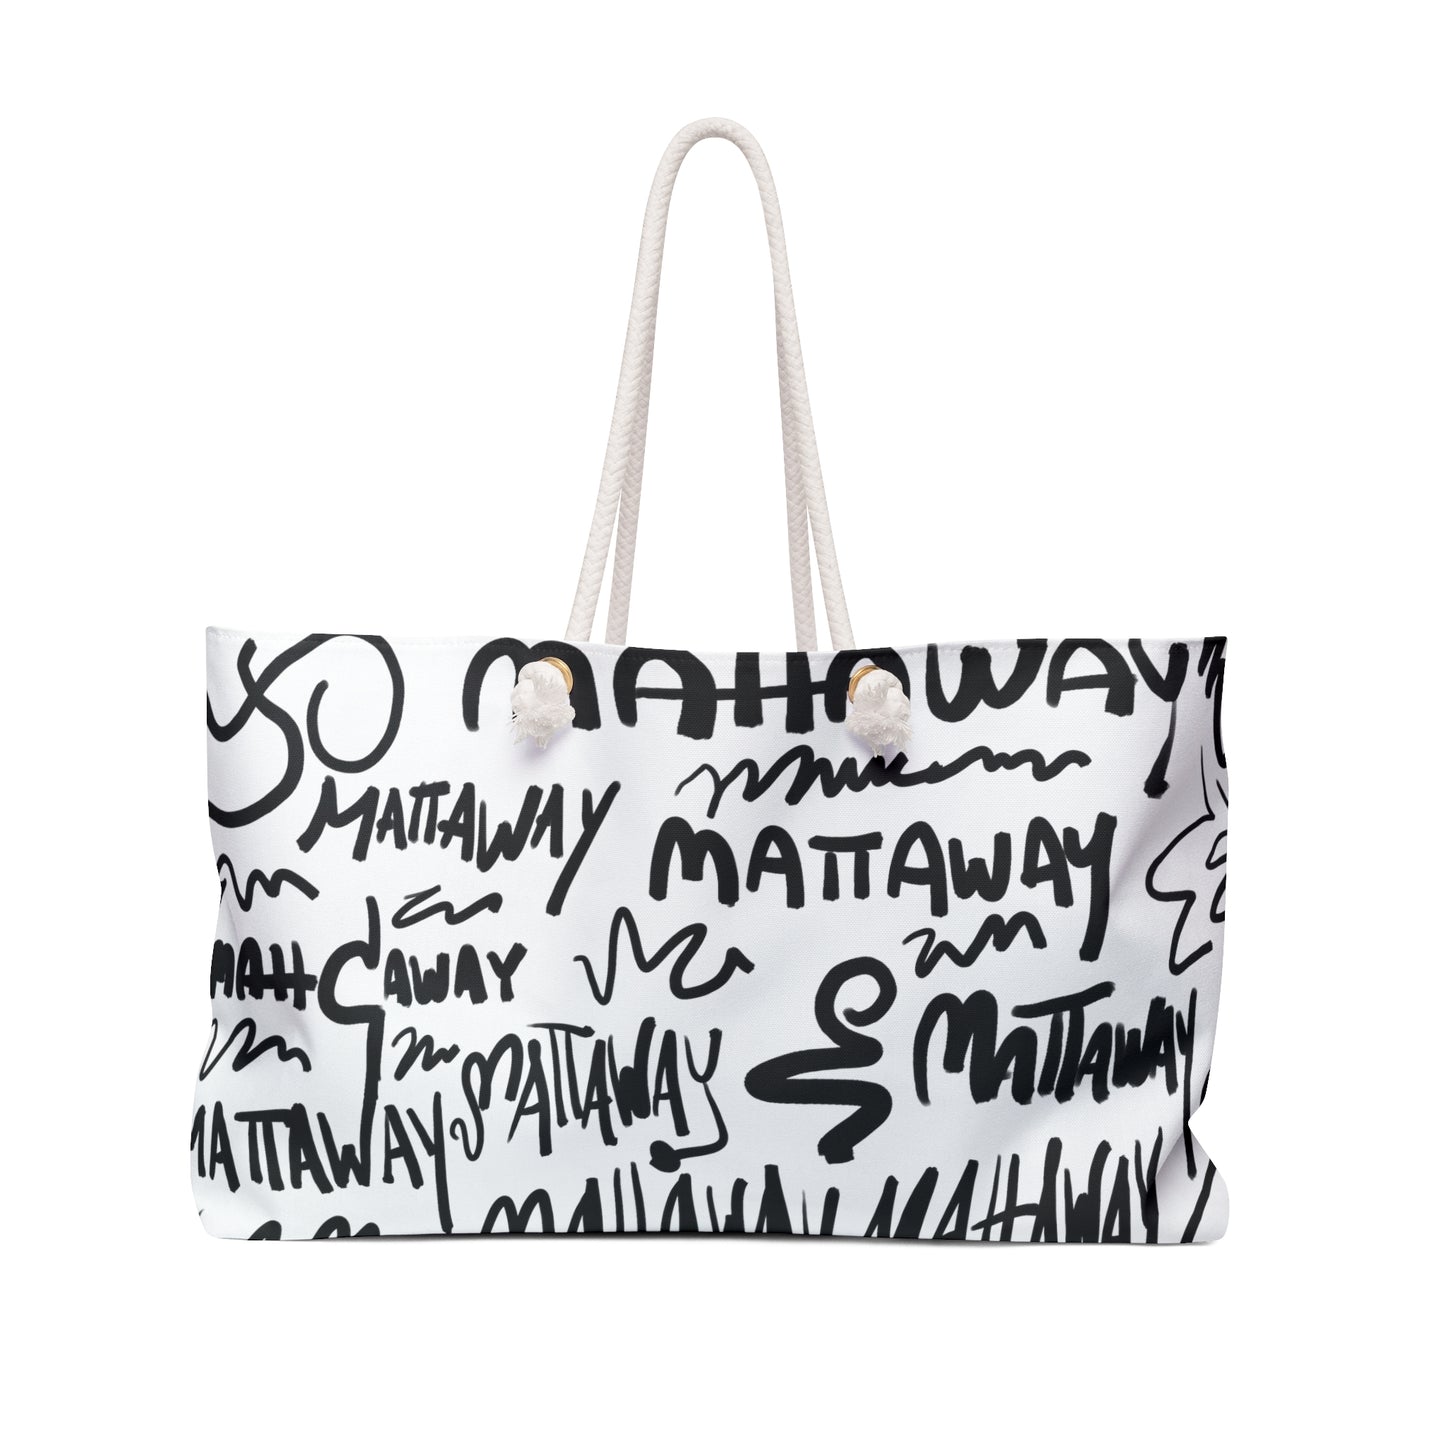 MATTAWAY SCRIBBLES - Weekender Bag